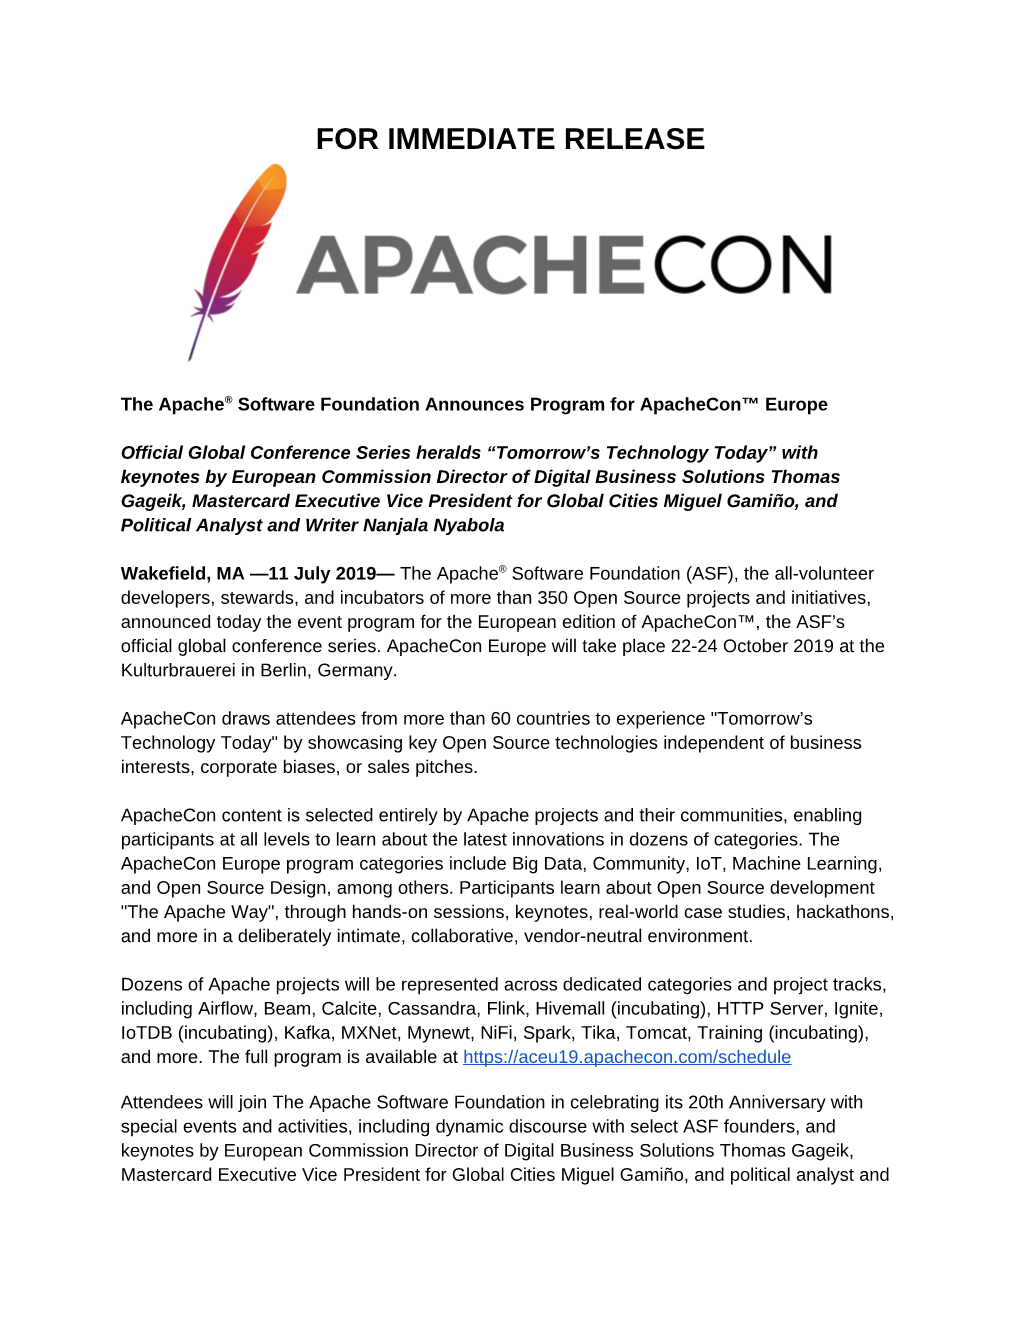 Apachecon Europe 2019